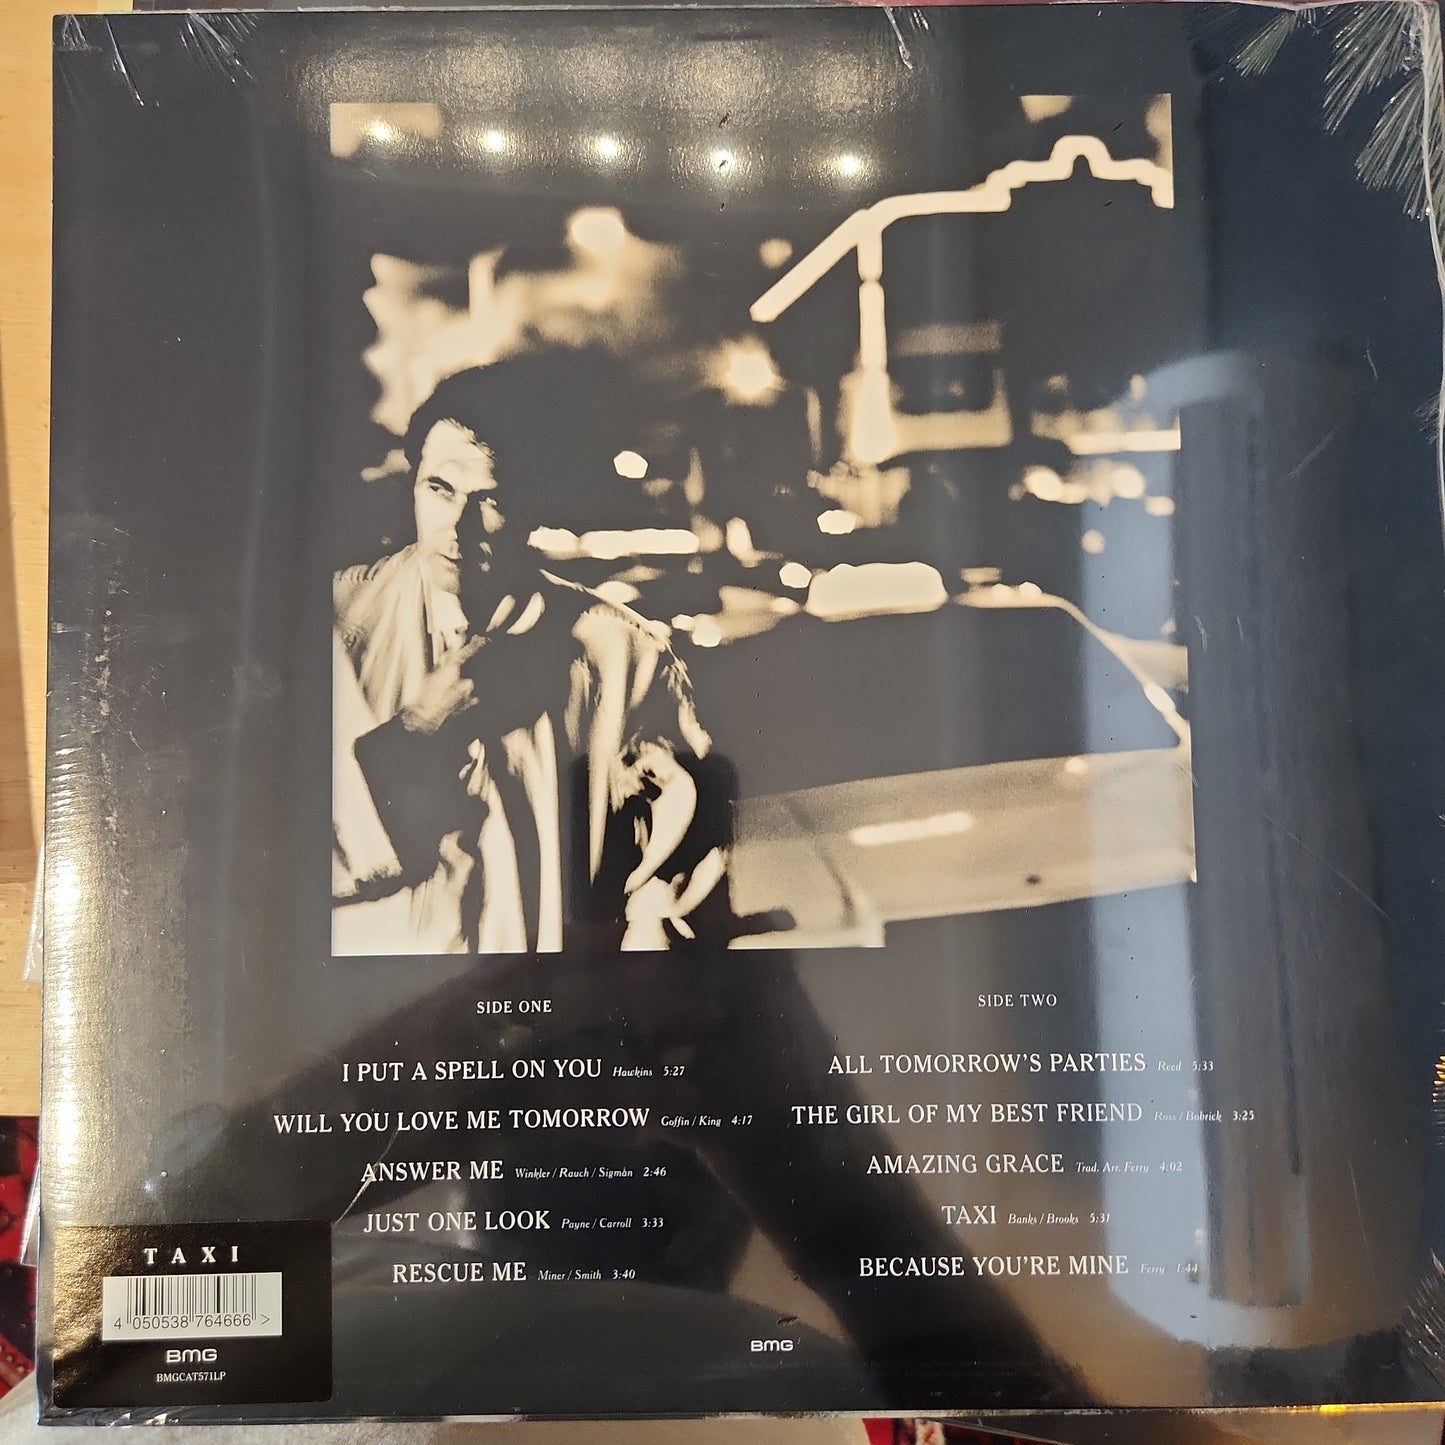 Bryan Ferry - Taxi - Vinyl LP